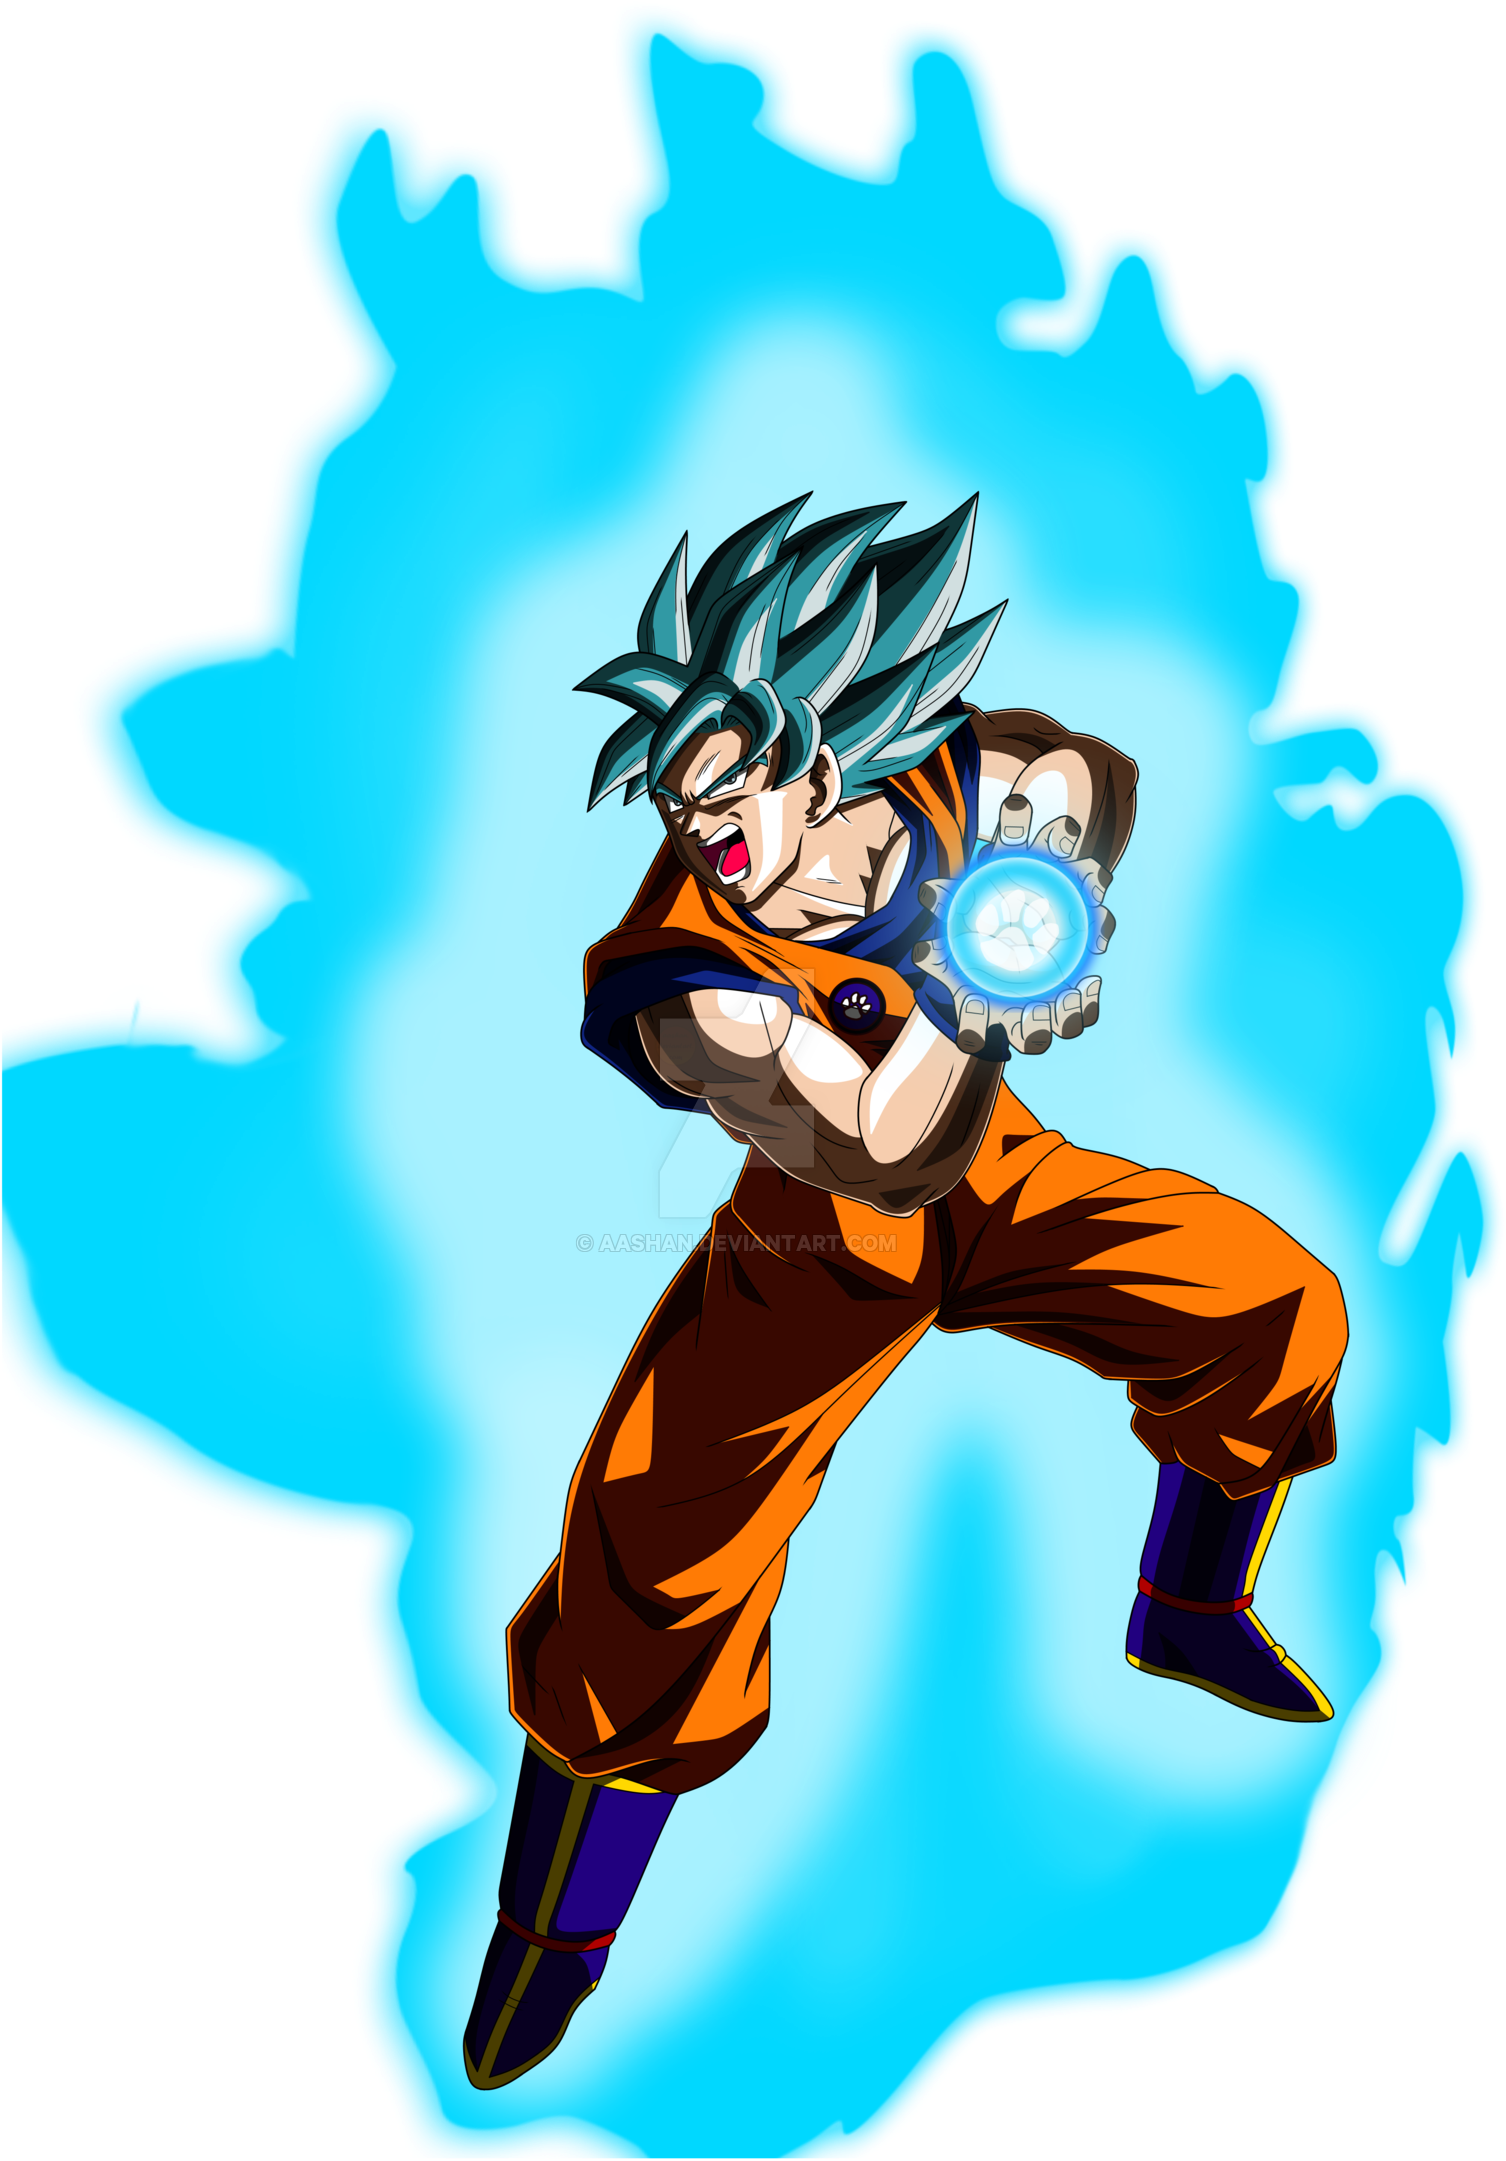 Goku Super Saiyan Blue Kamehameha Pose By Aashananimeart.